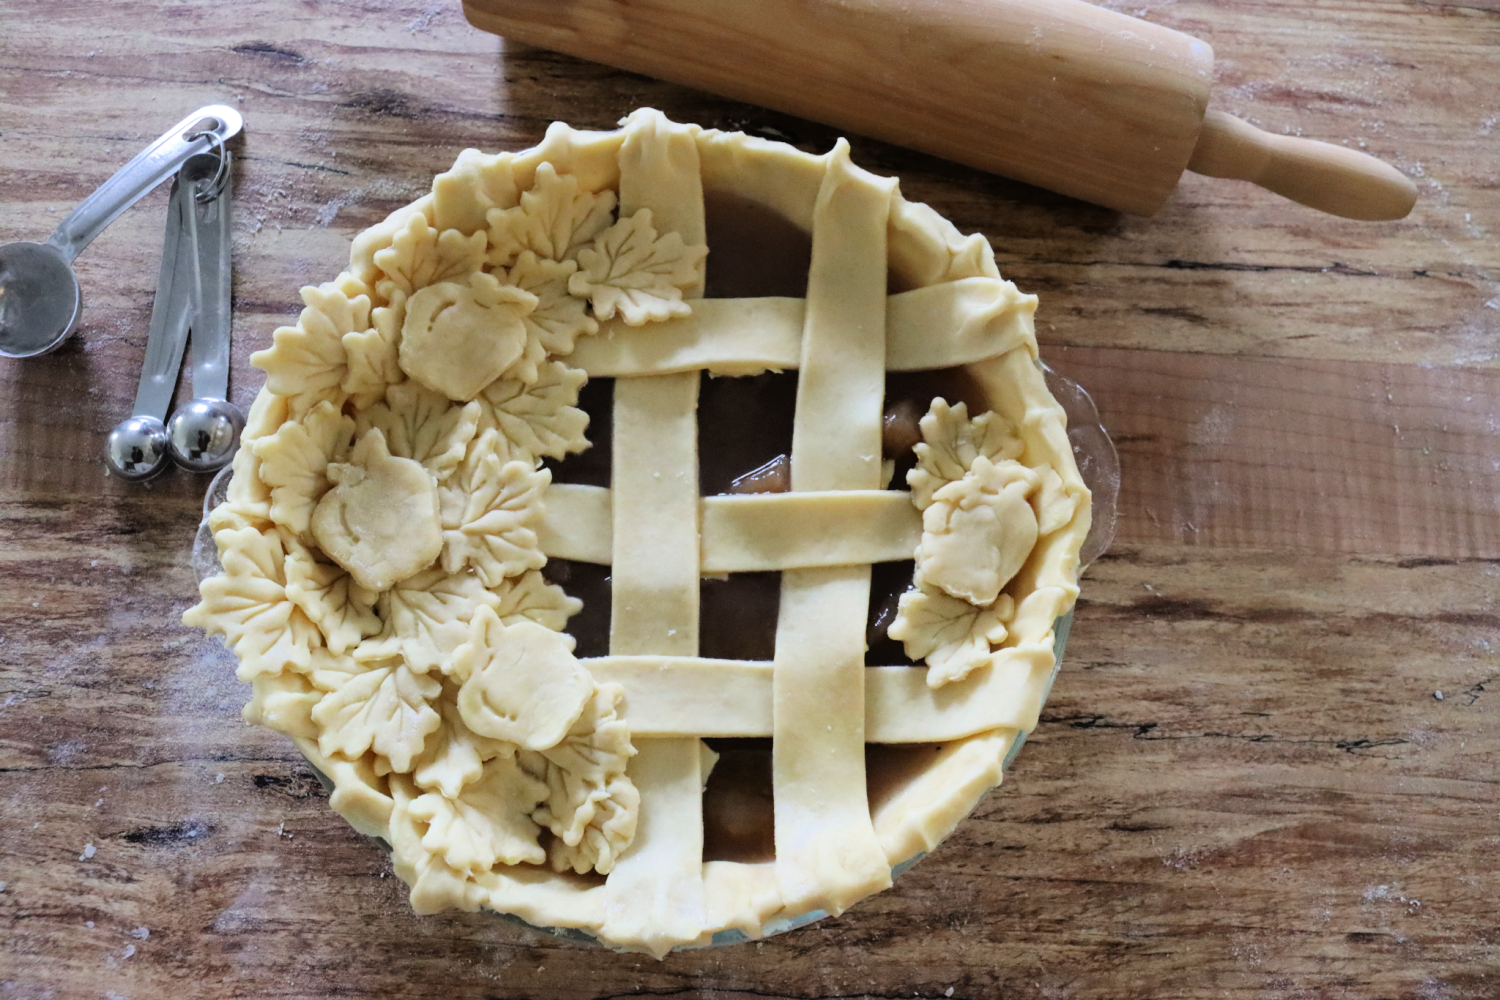 Beautiful Pie Crust Designs Tutorial (Video) - Sally's Baking